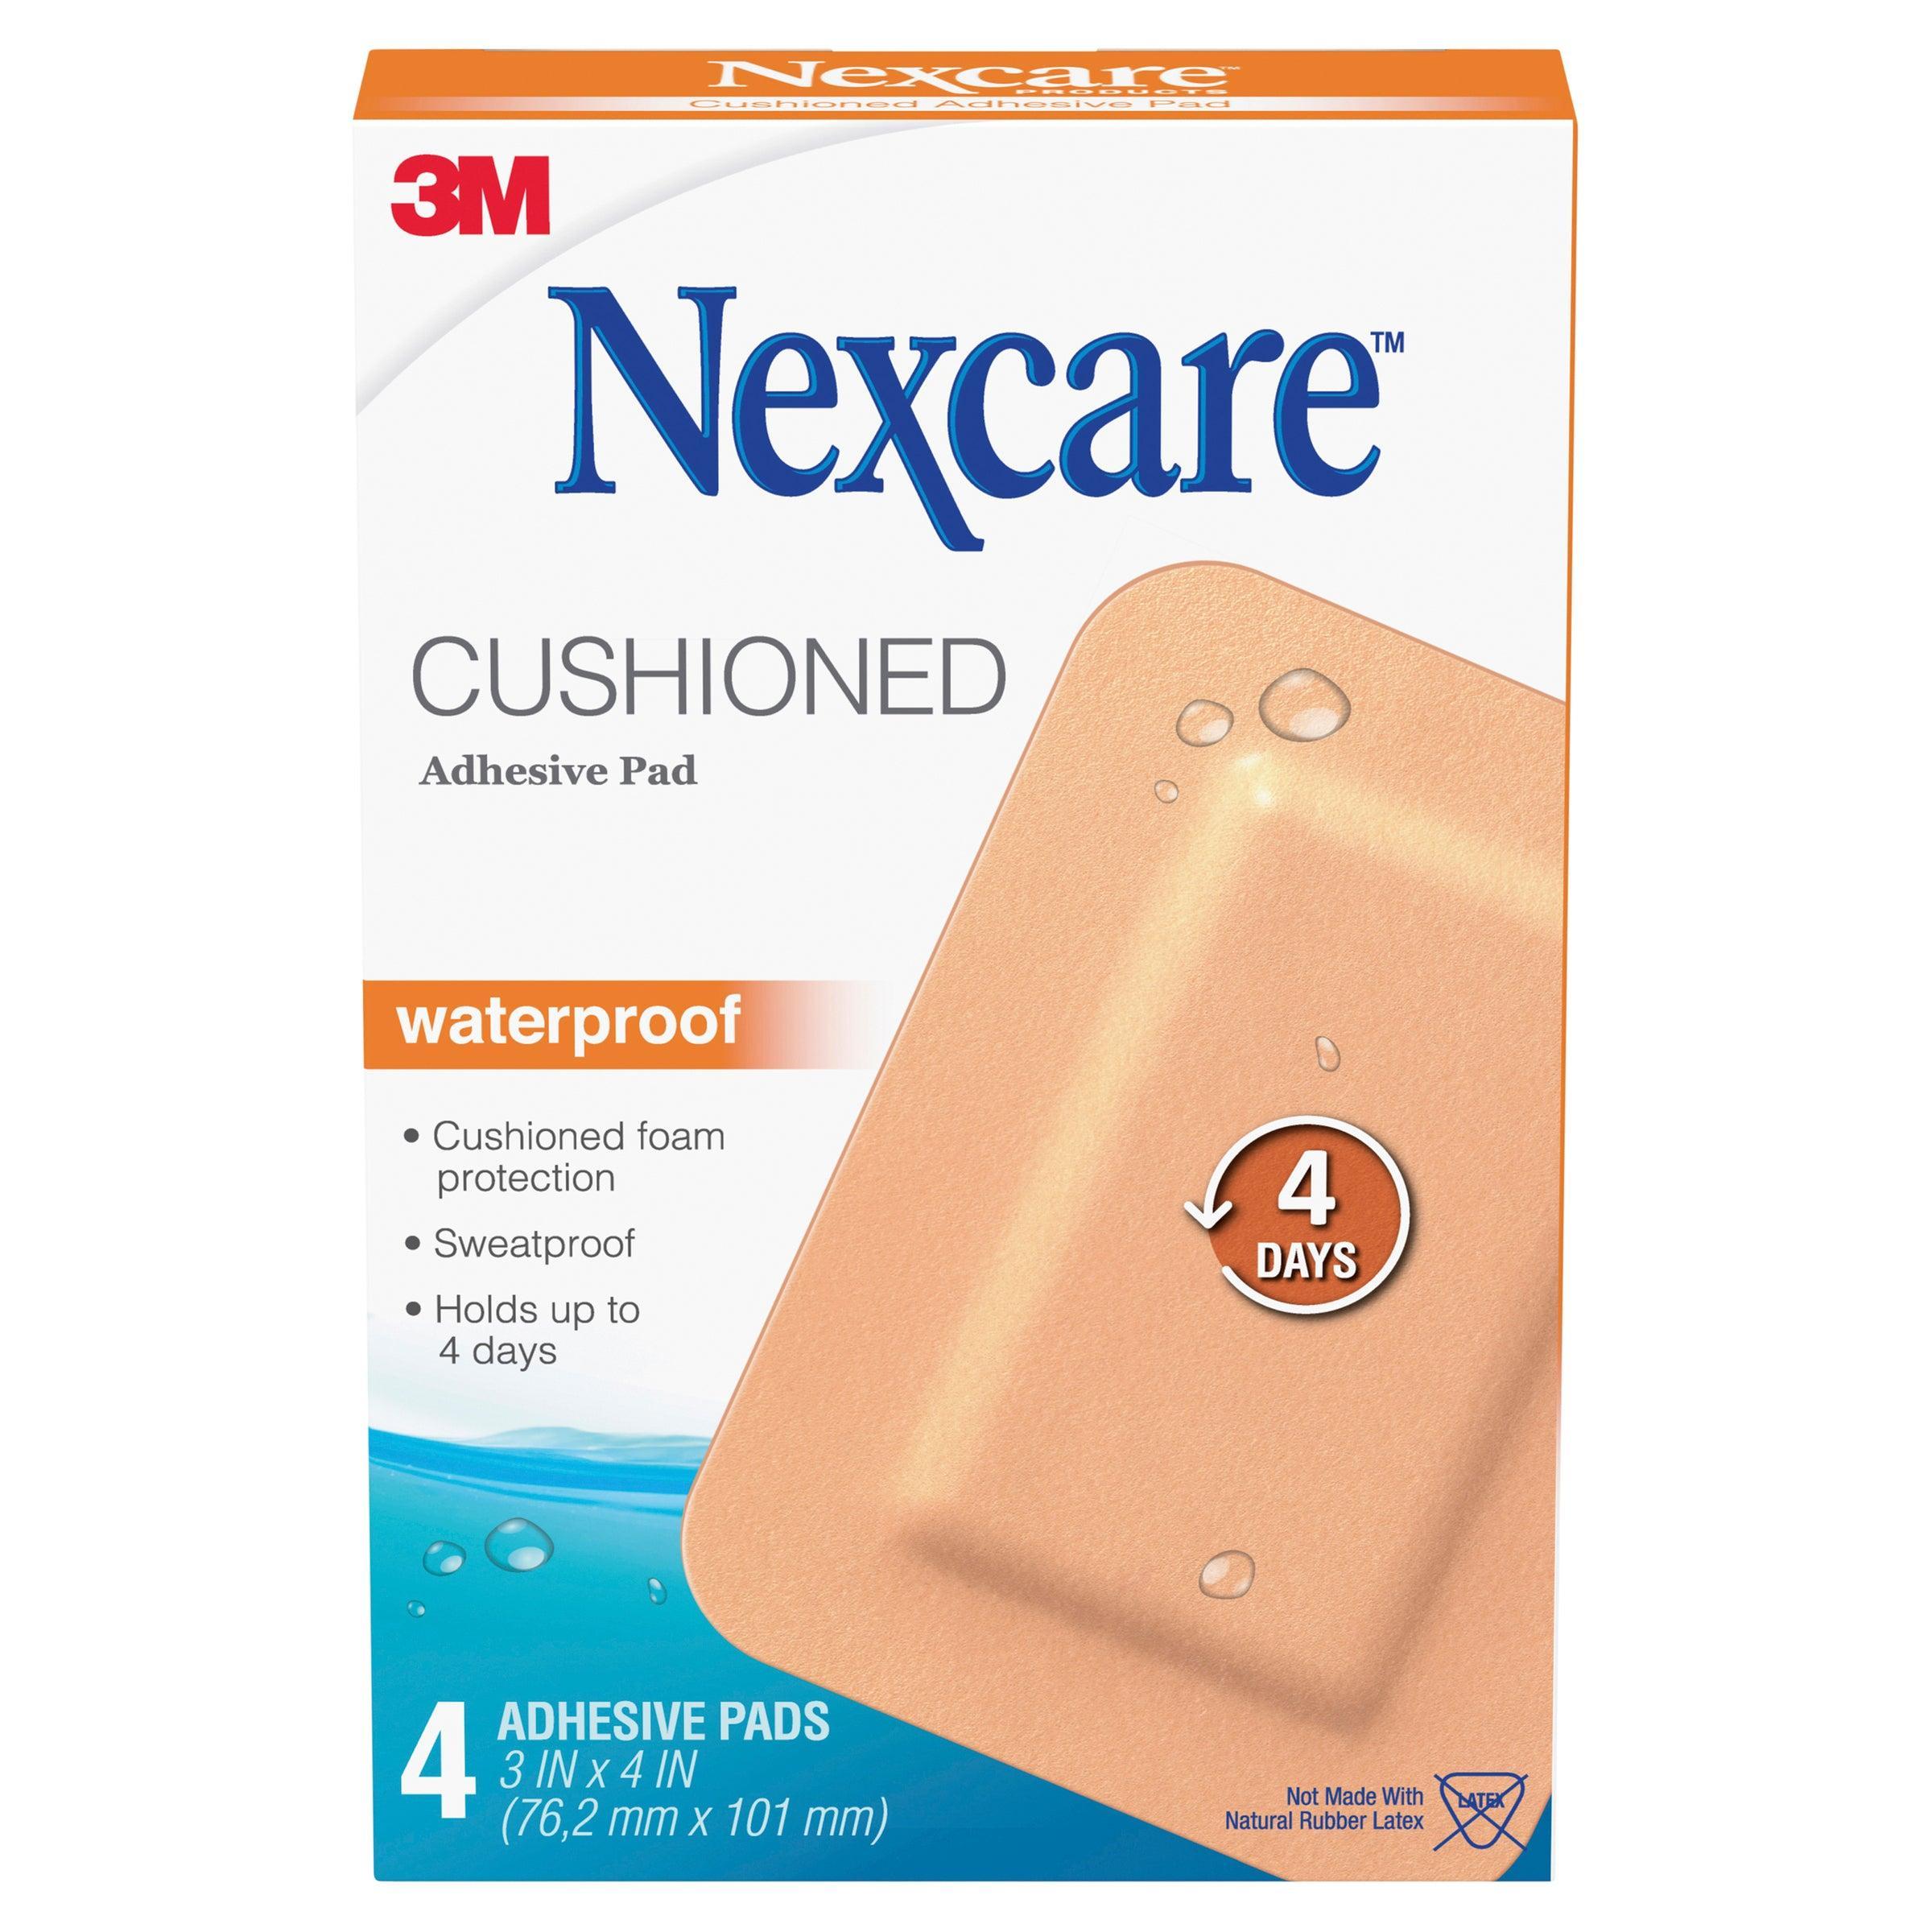 Nexcare Cushioned Waterproof Adhesive Pad 4PK